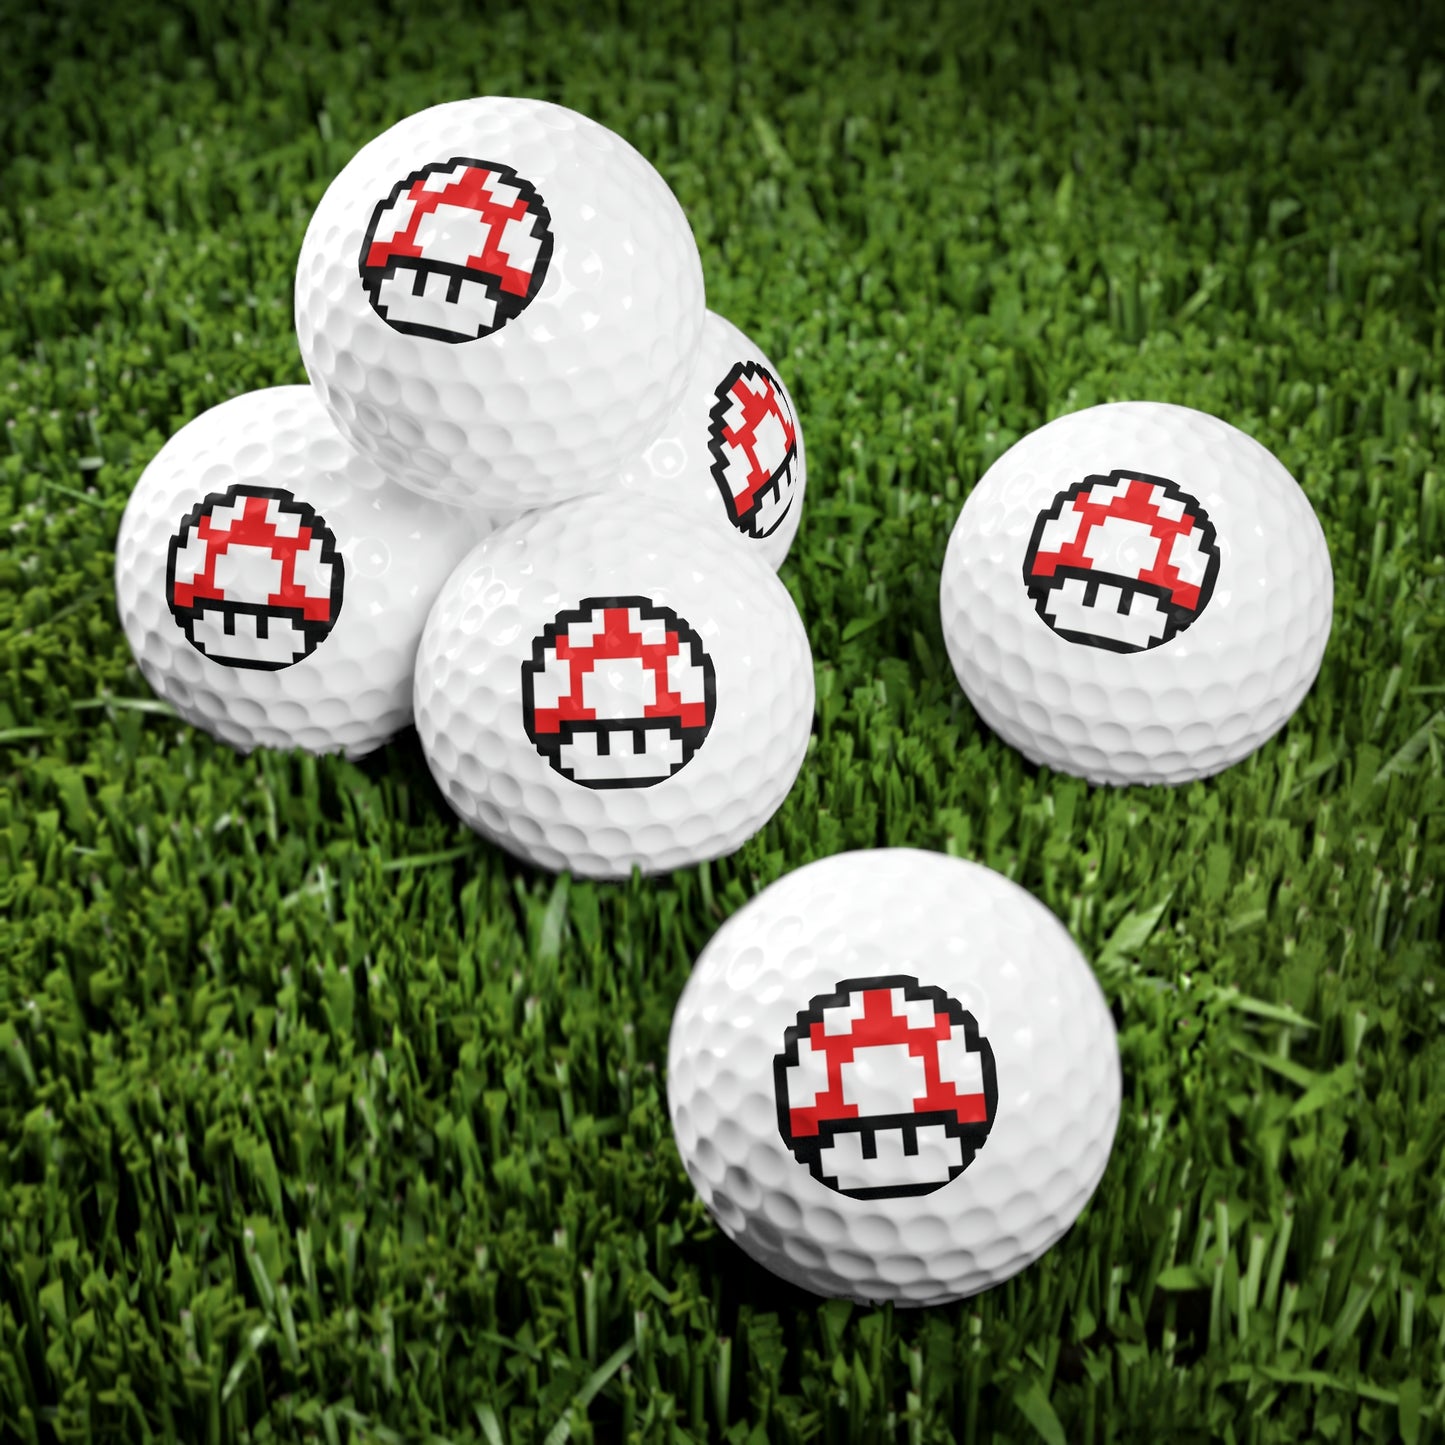 Red Mushroom 8 Bit Style Golf Balls, 6pcs